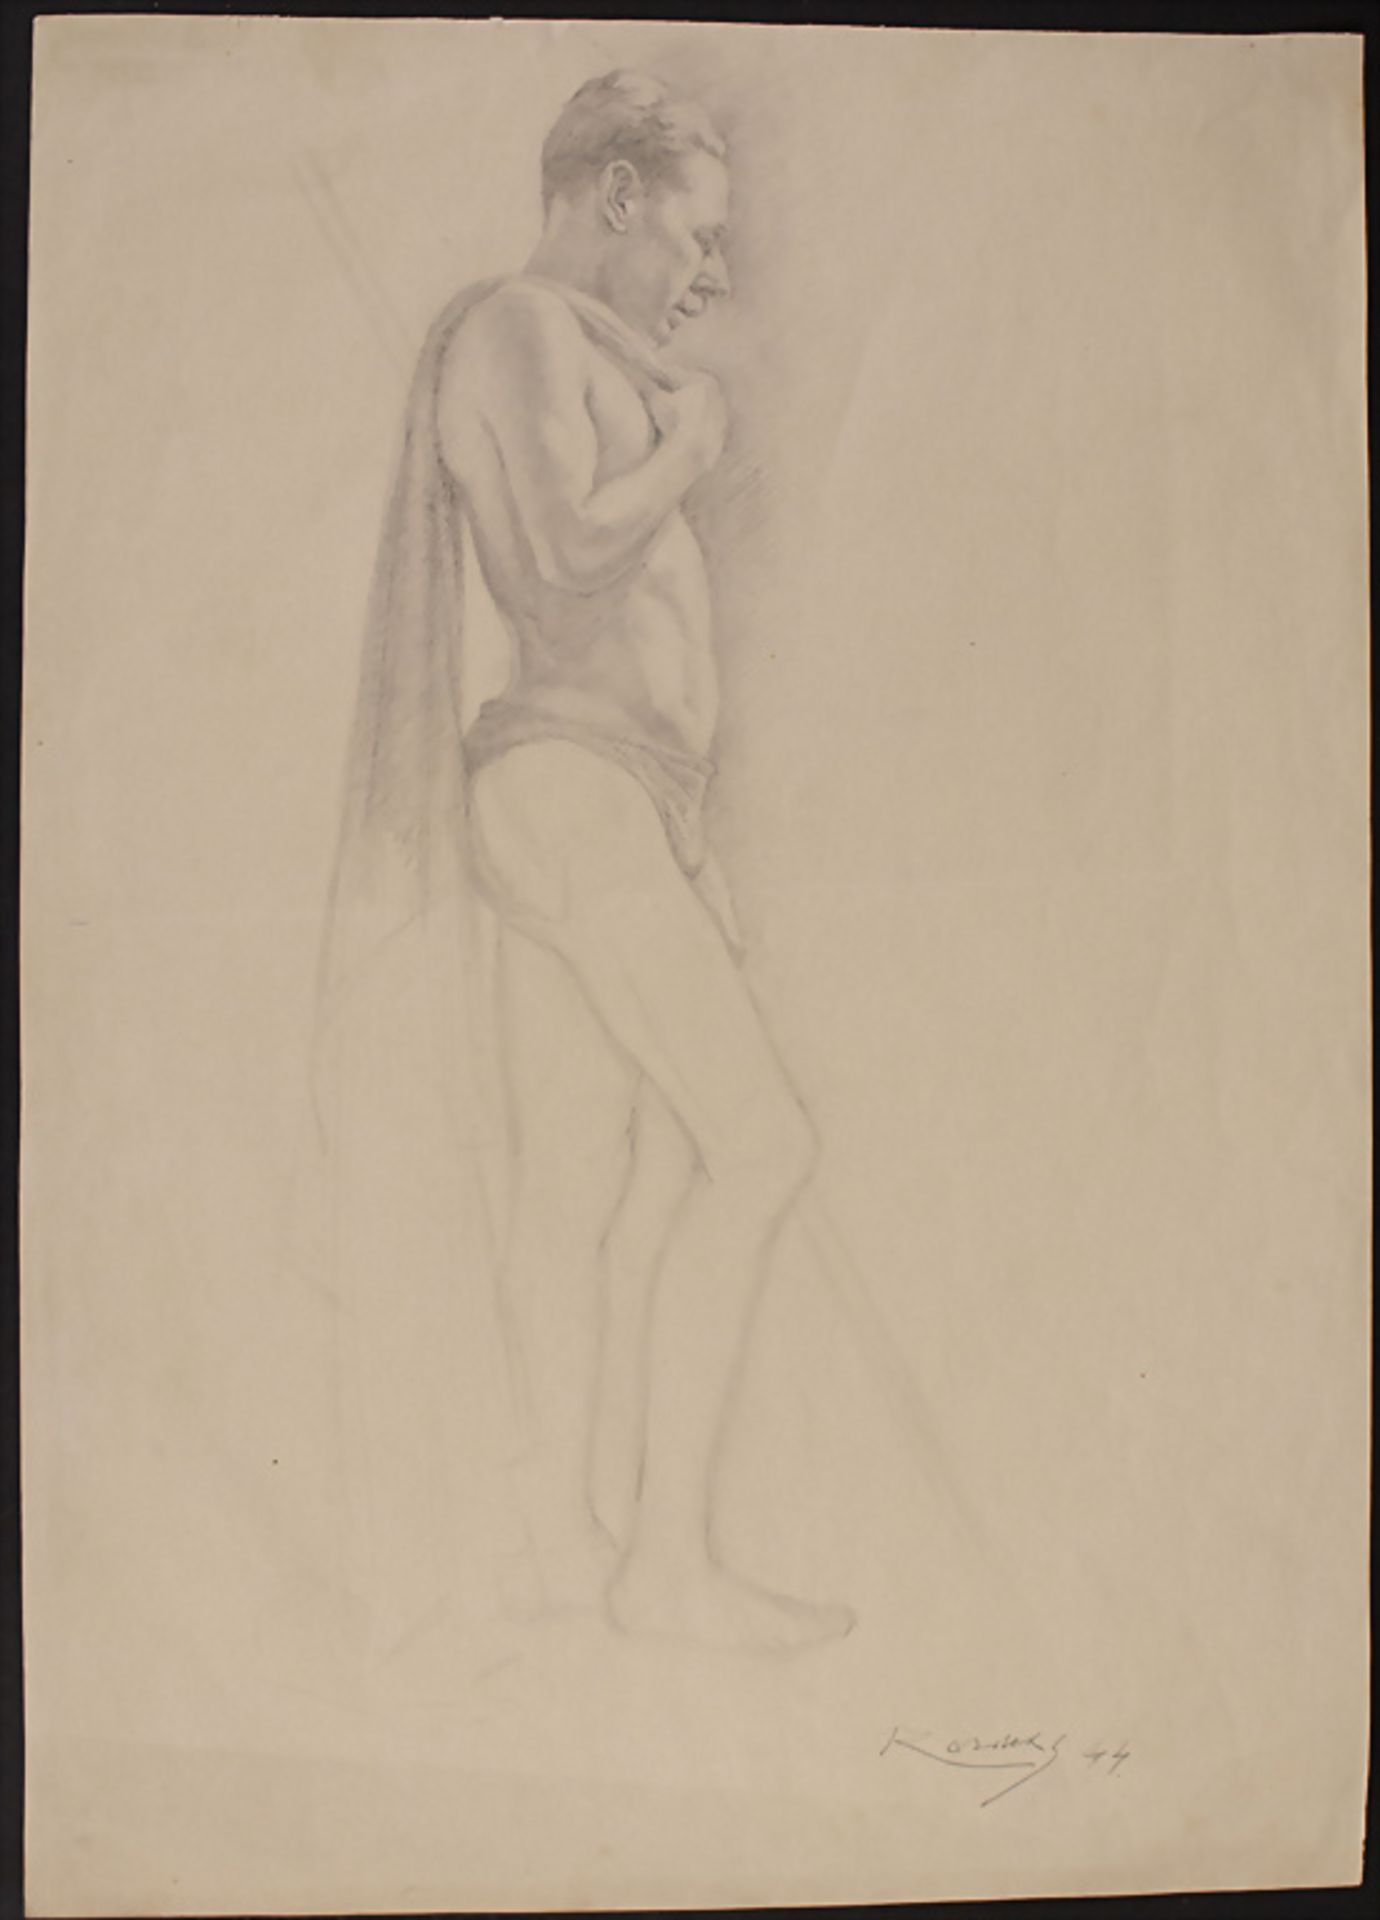 Rosina SMULLYAN (1875-1961), Aktstudie / Study of a nude